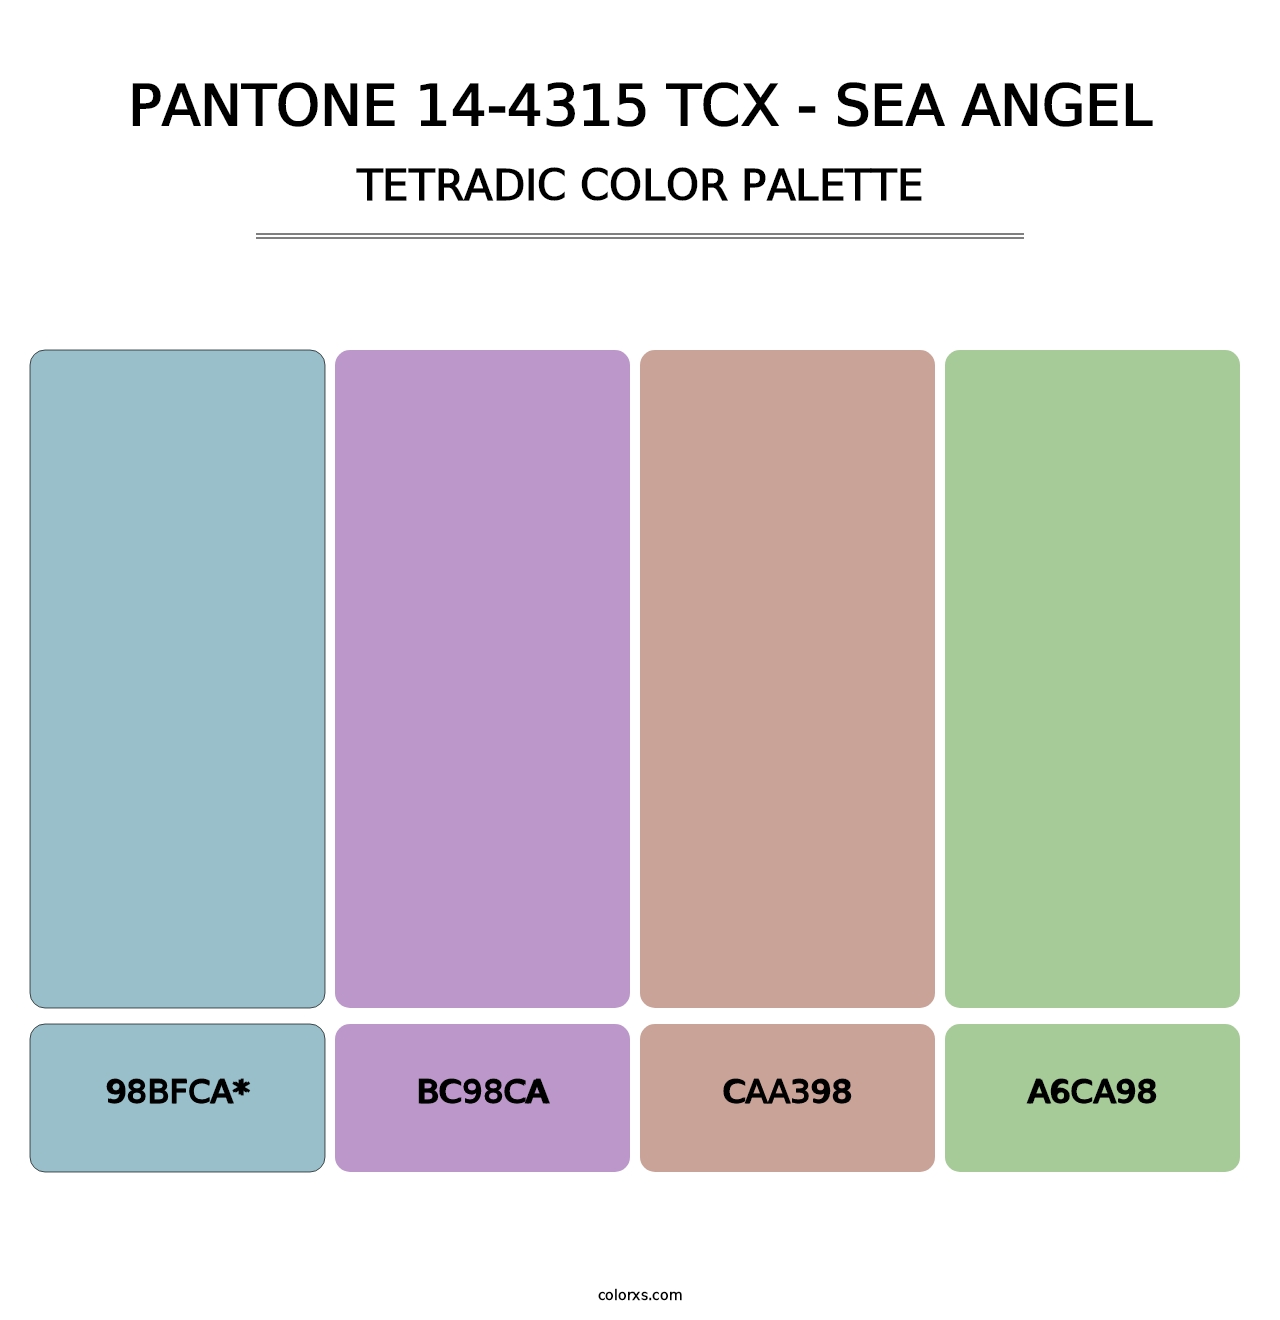 PANTONE 14-4315 TCX - Sea Angel - Tetradic Color Palette